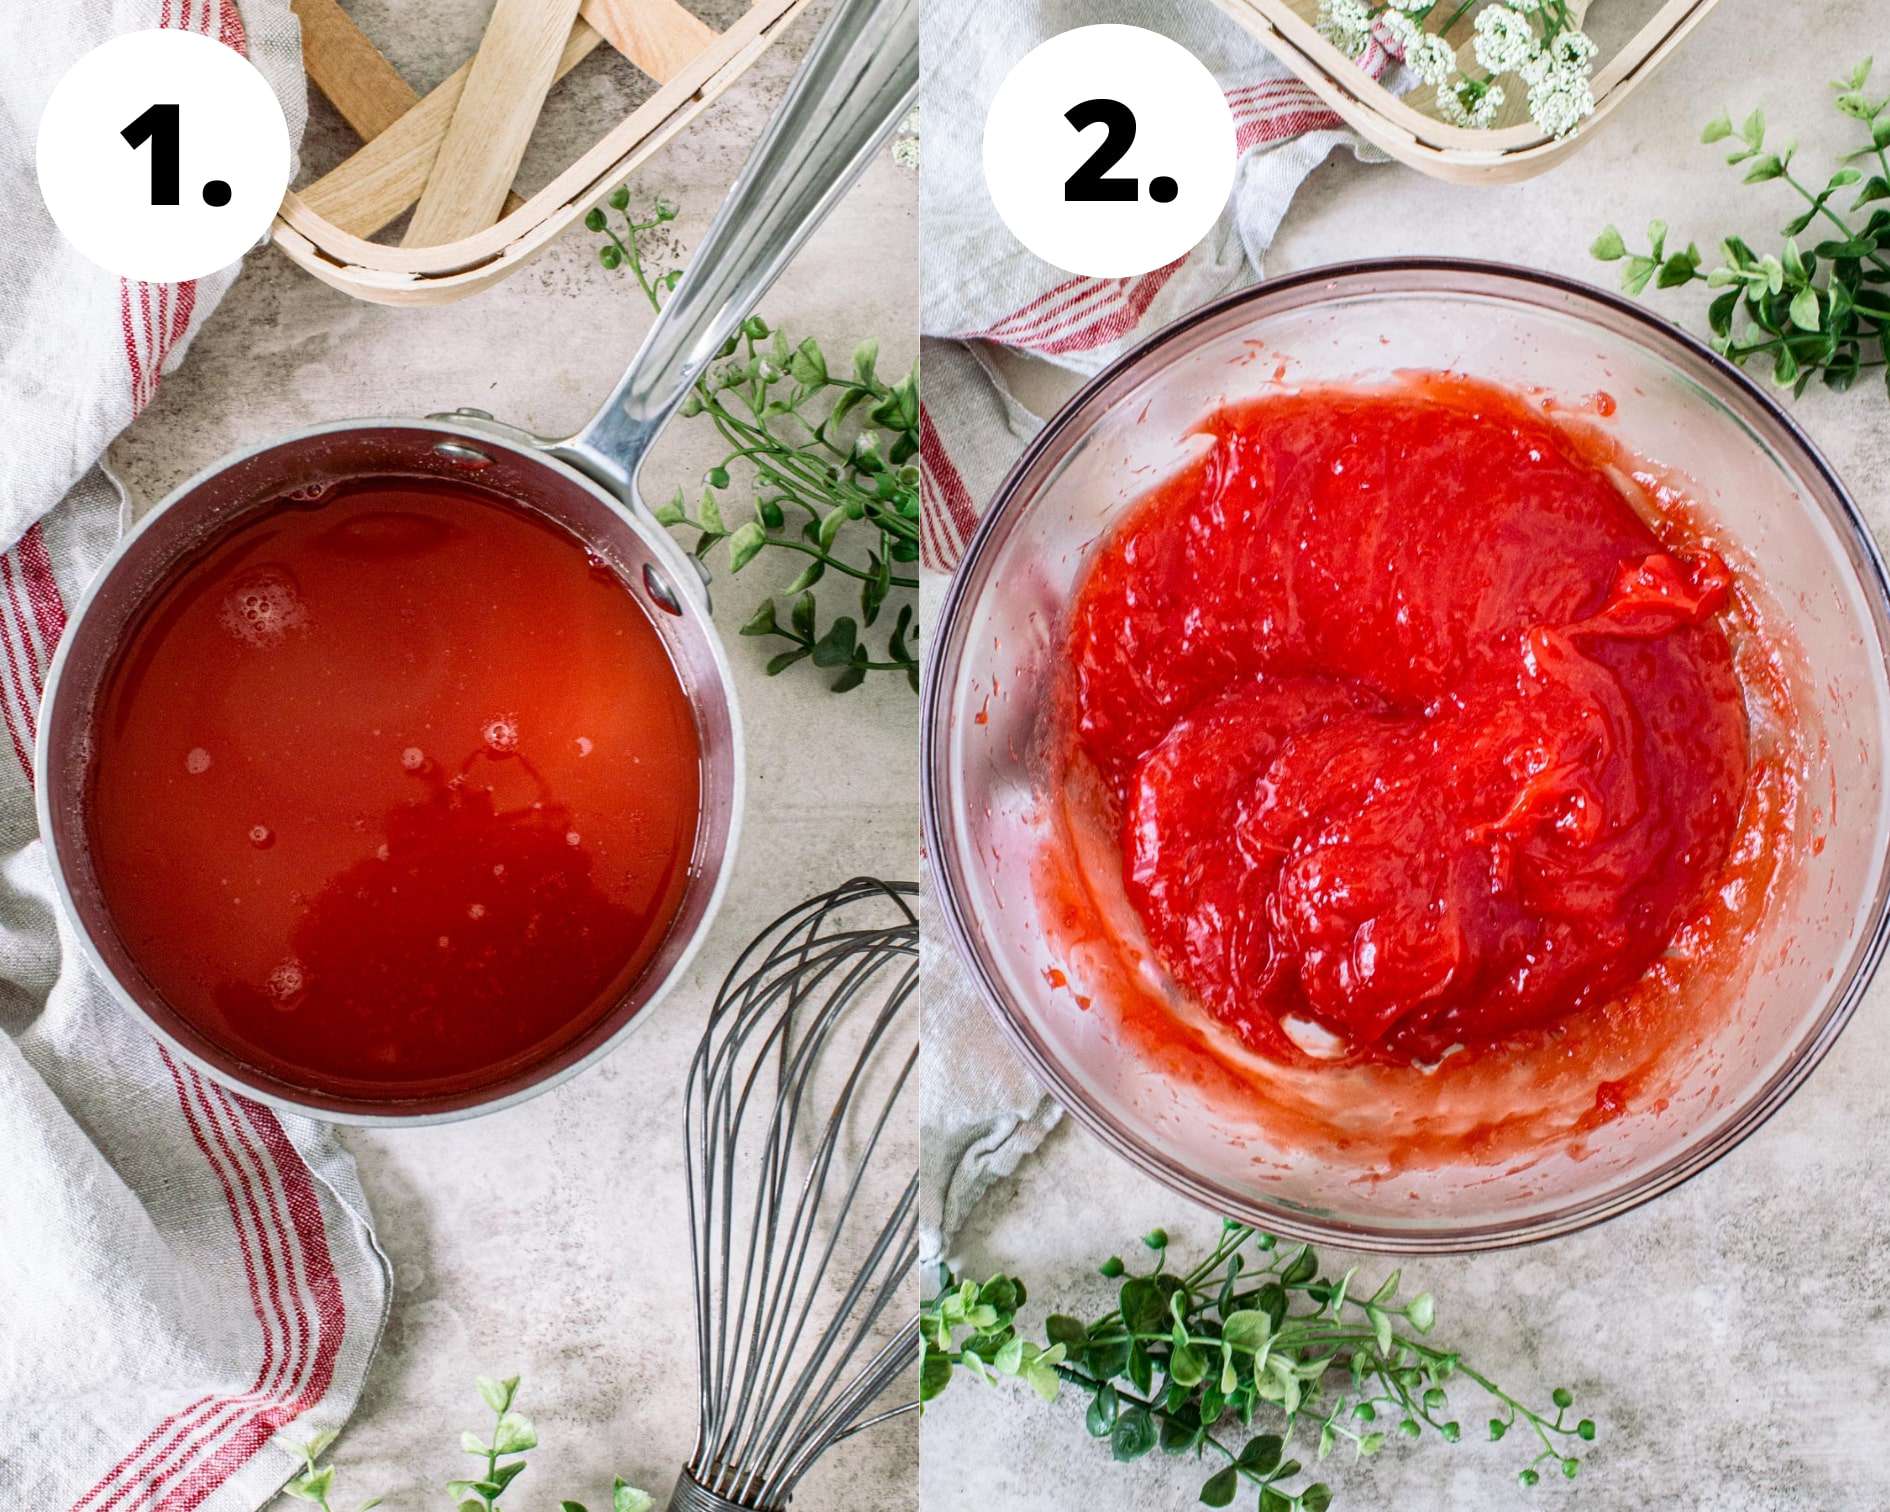 Strawberry jello fluff salad process steps 1 and 2.